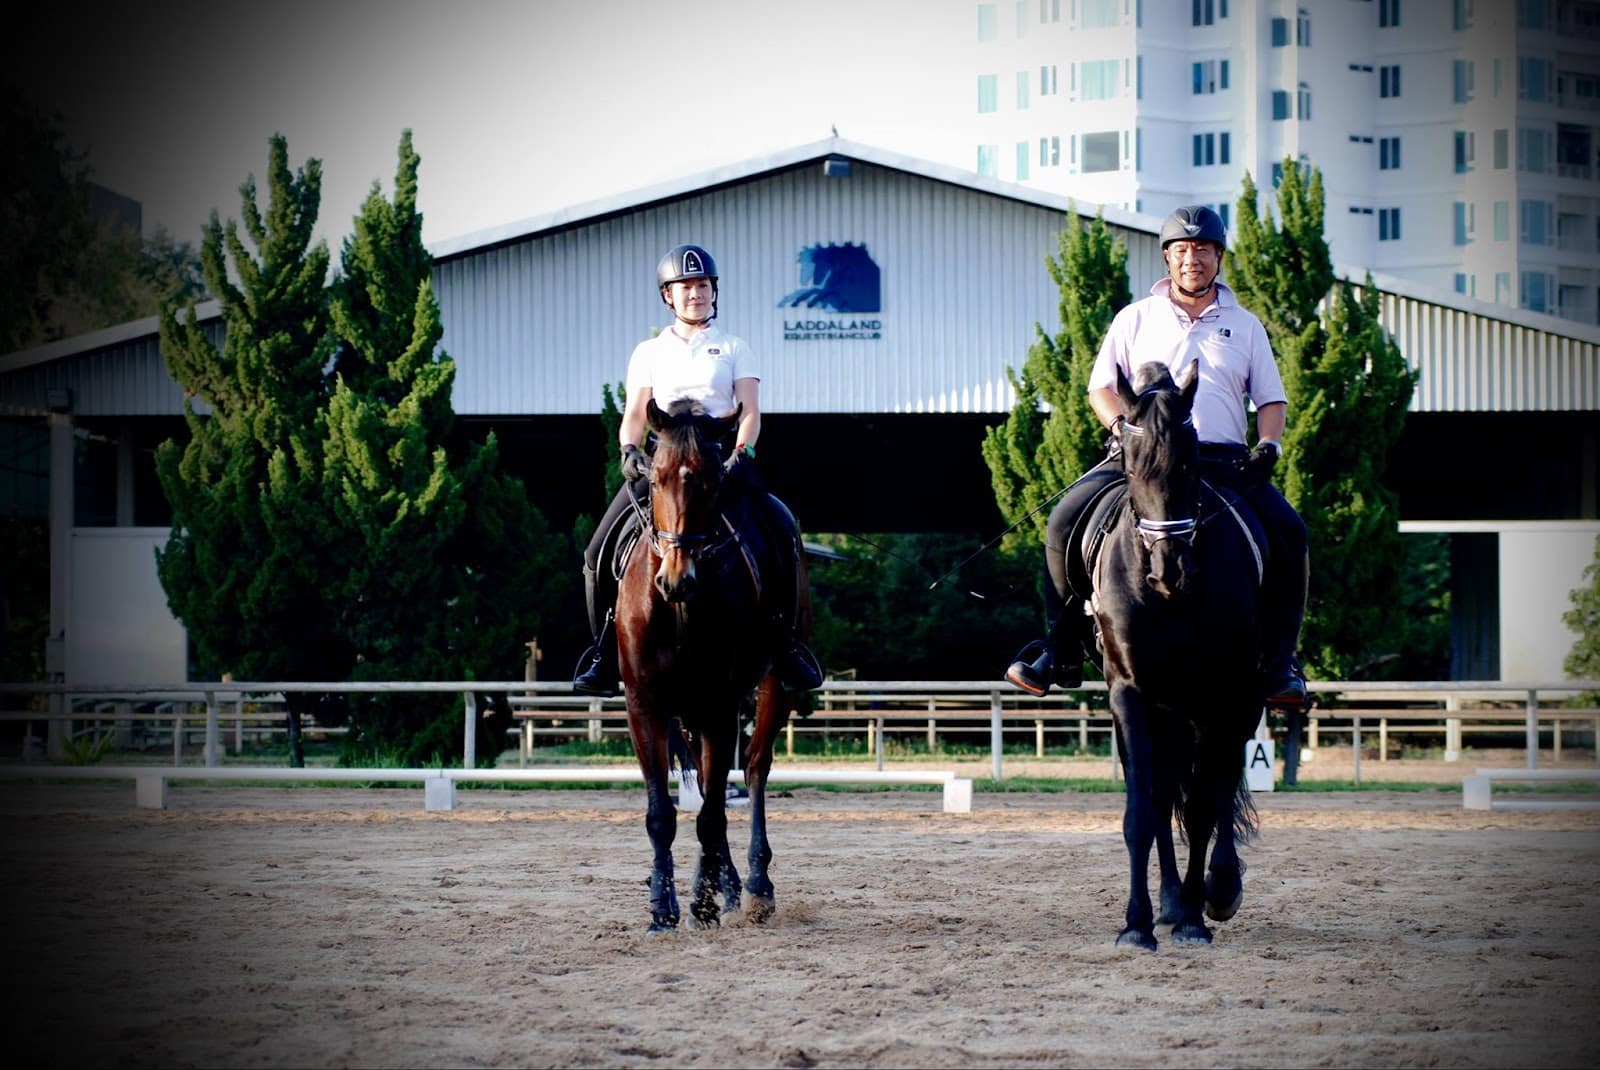 A couple enjoying recreational horse riding at Laddaland Equestrian Club